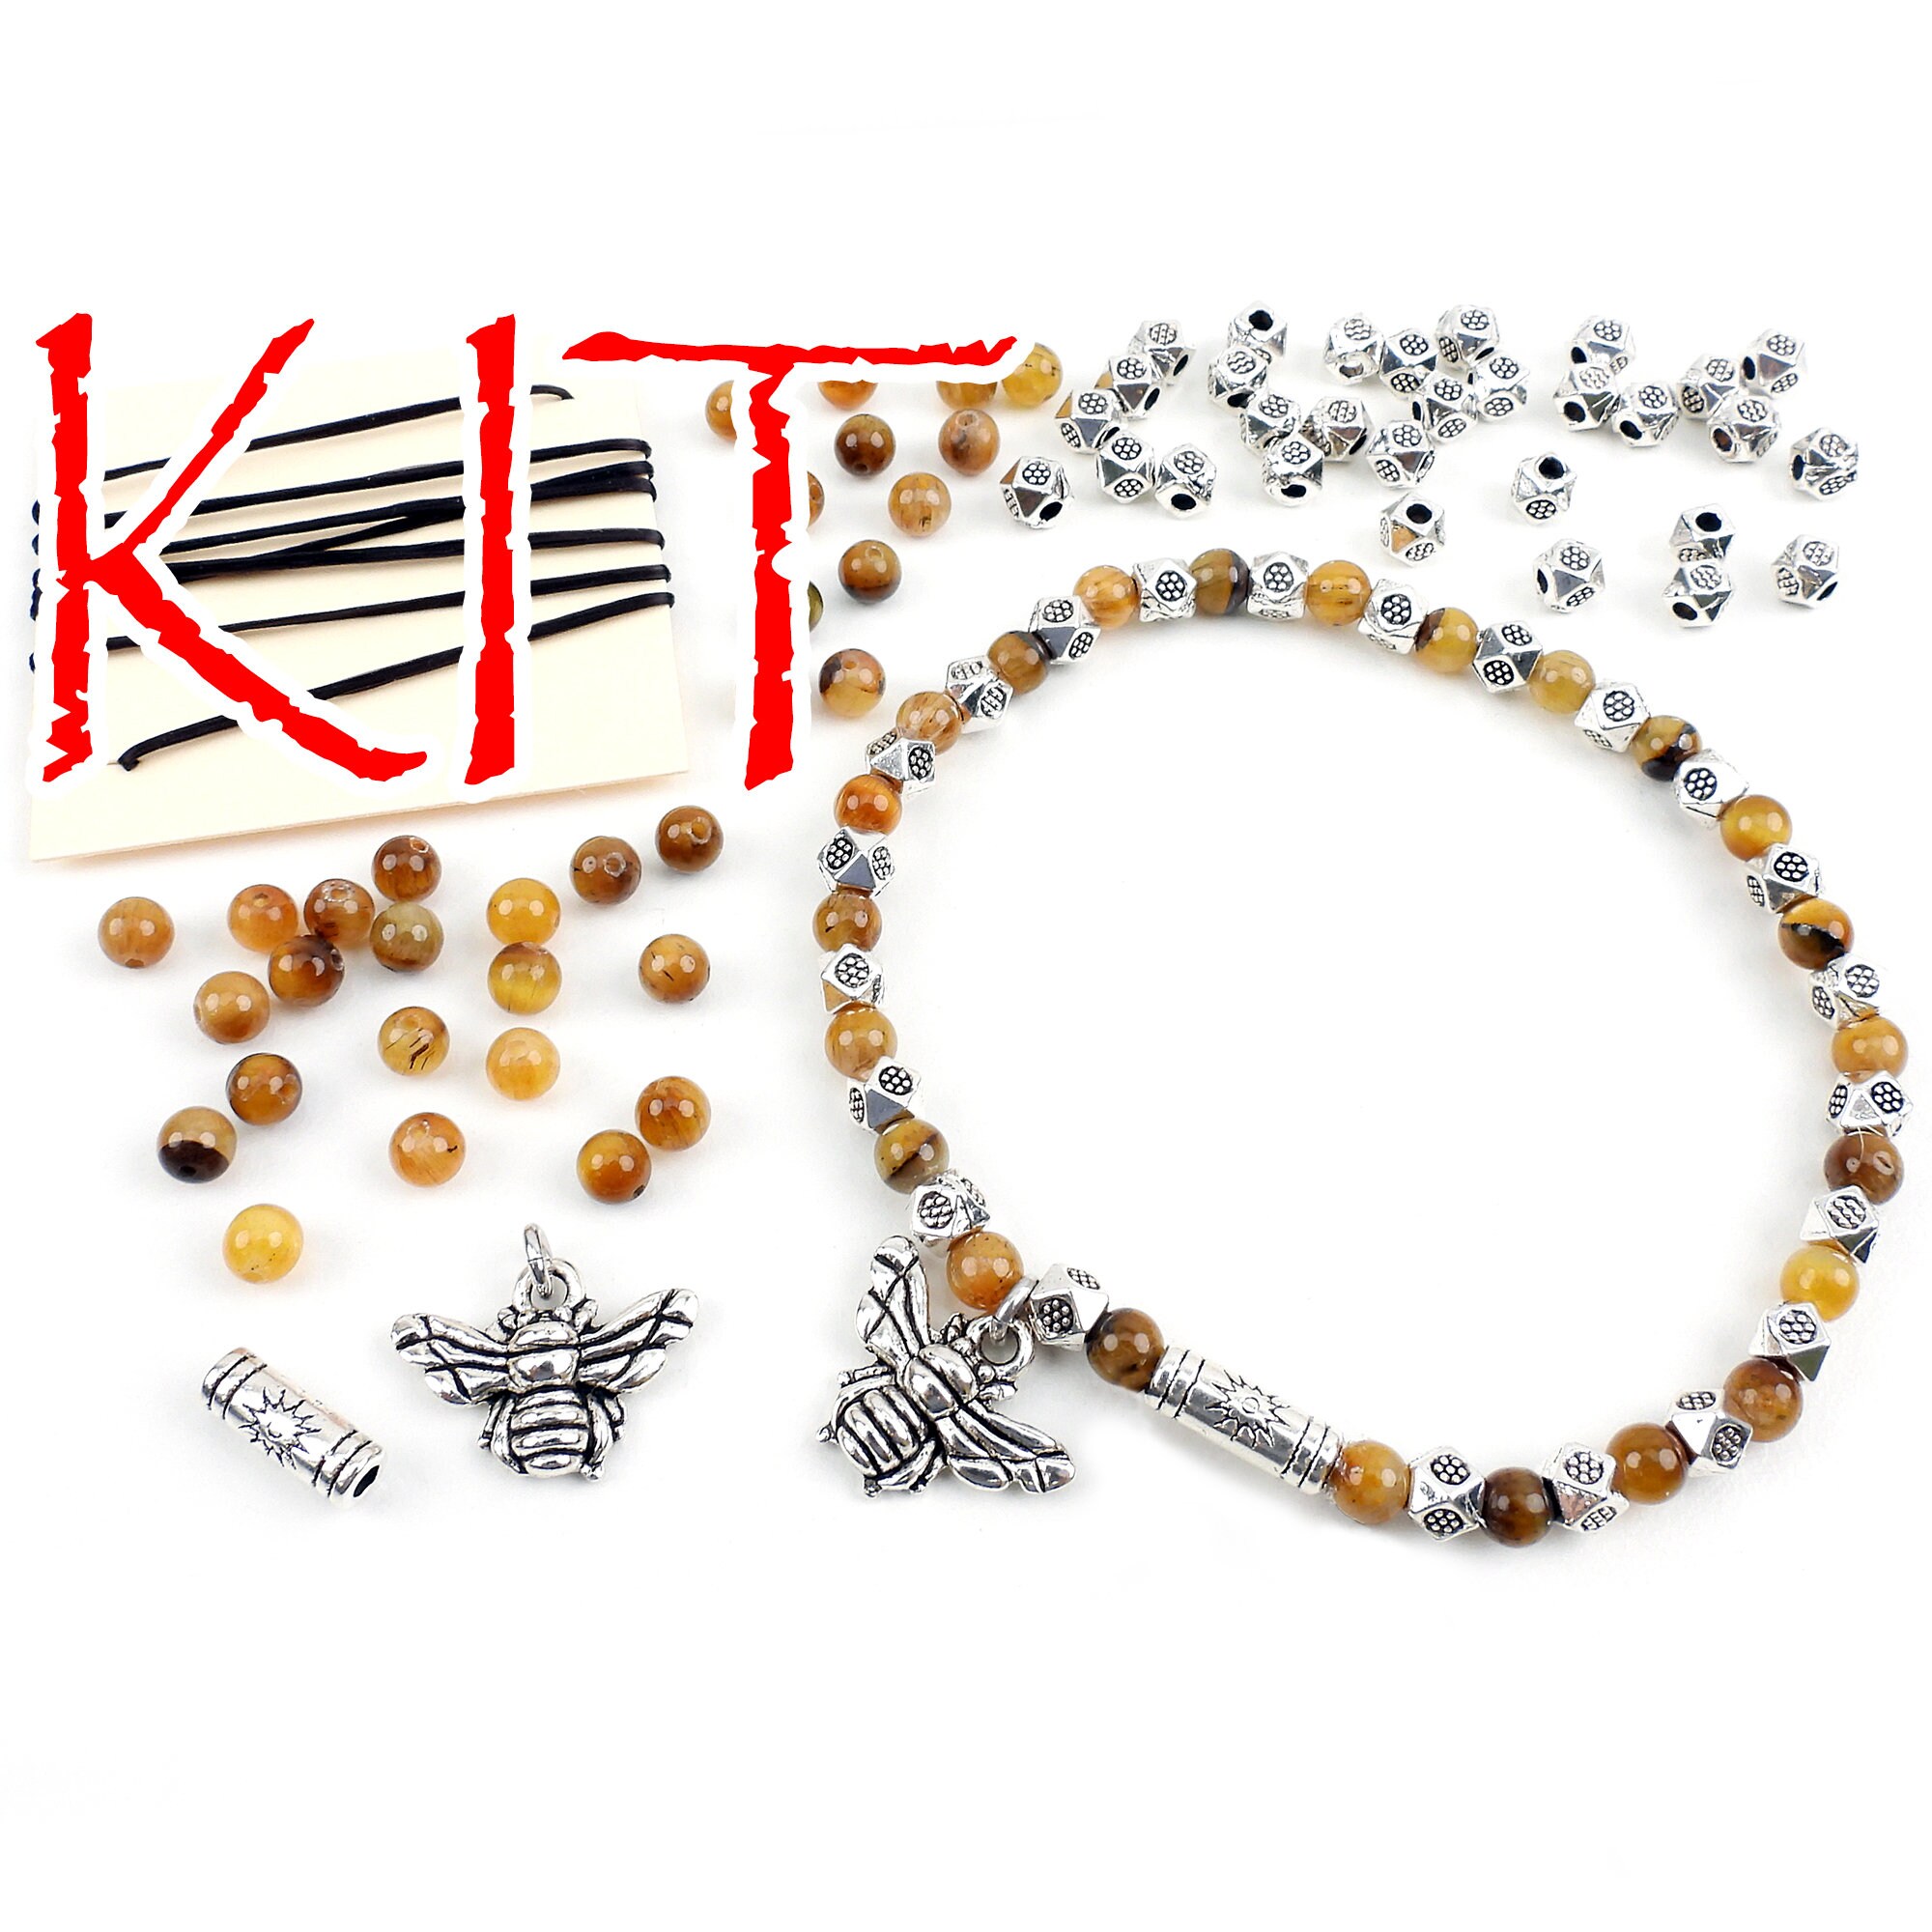 Charm Bracelet Kit, Do It Yourself Jewelry Making Kit, Over 50